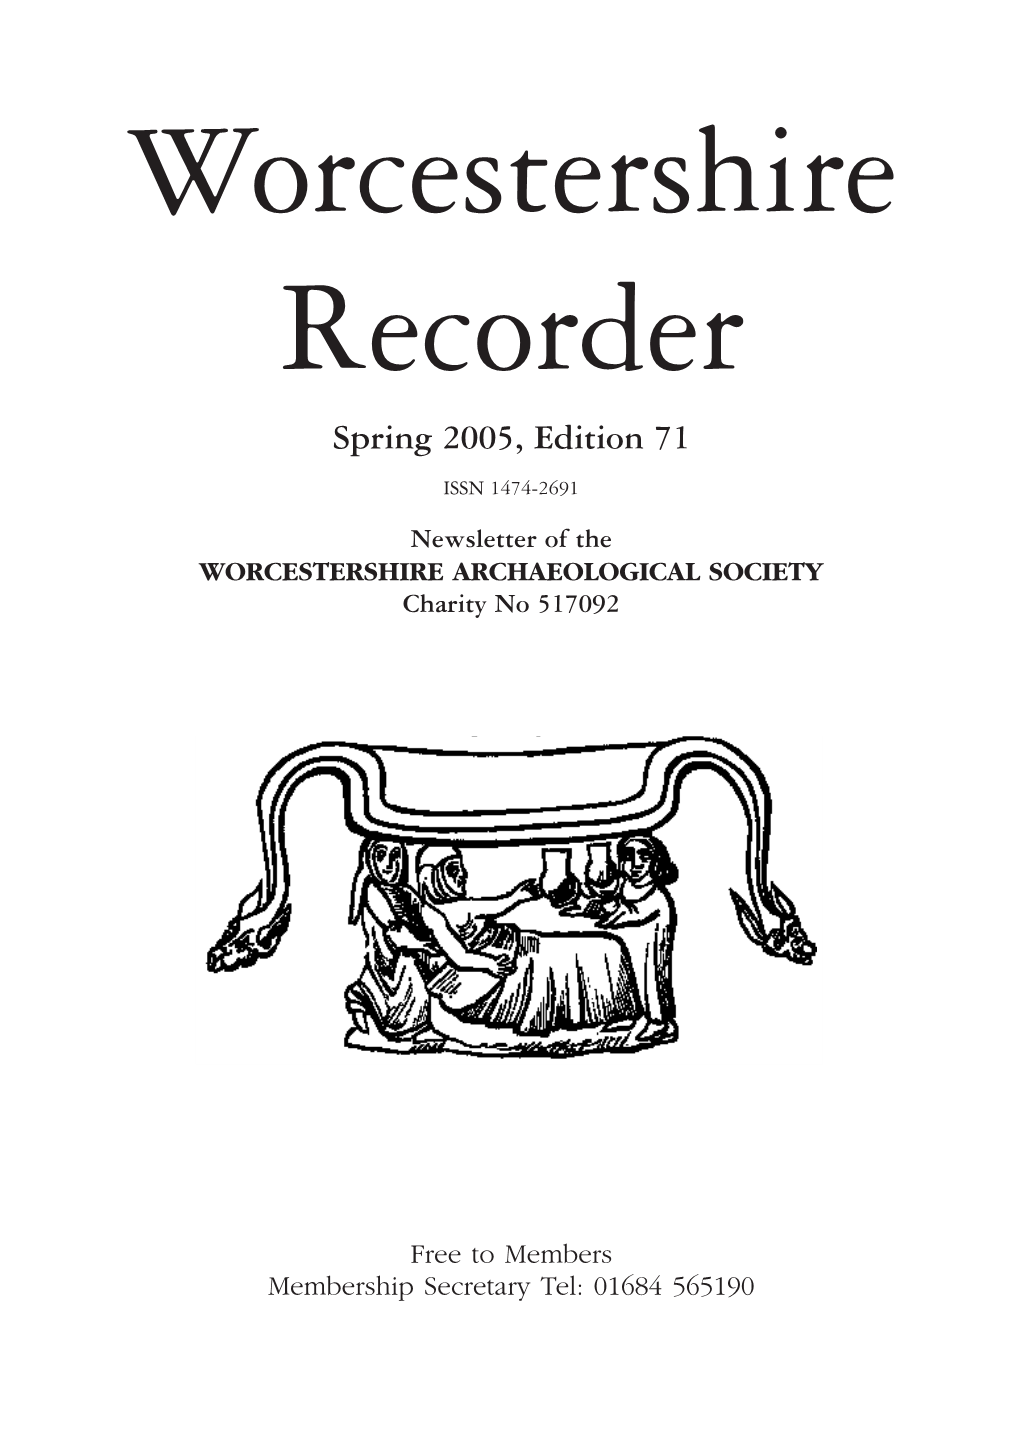 Worcs Recorder Issue 71